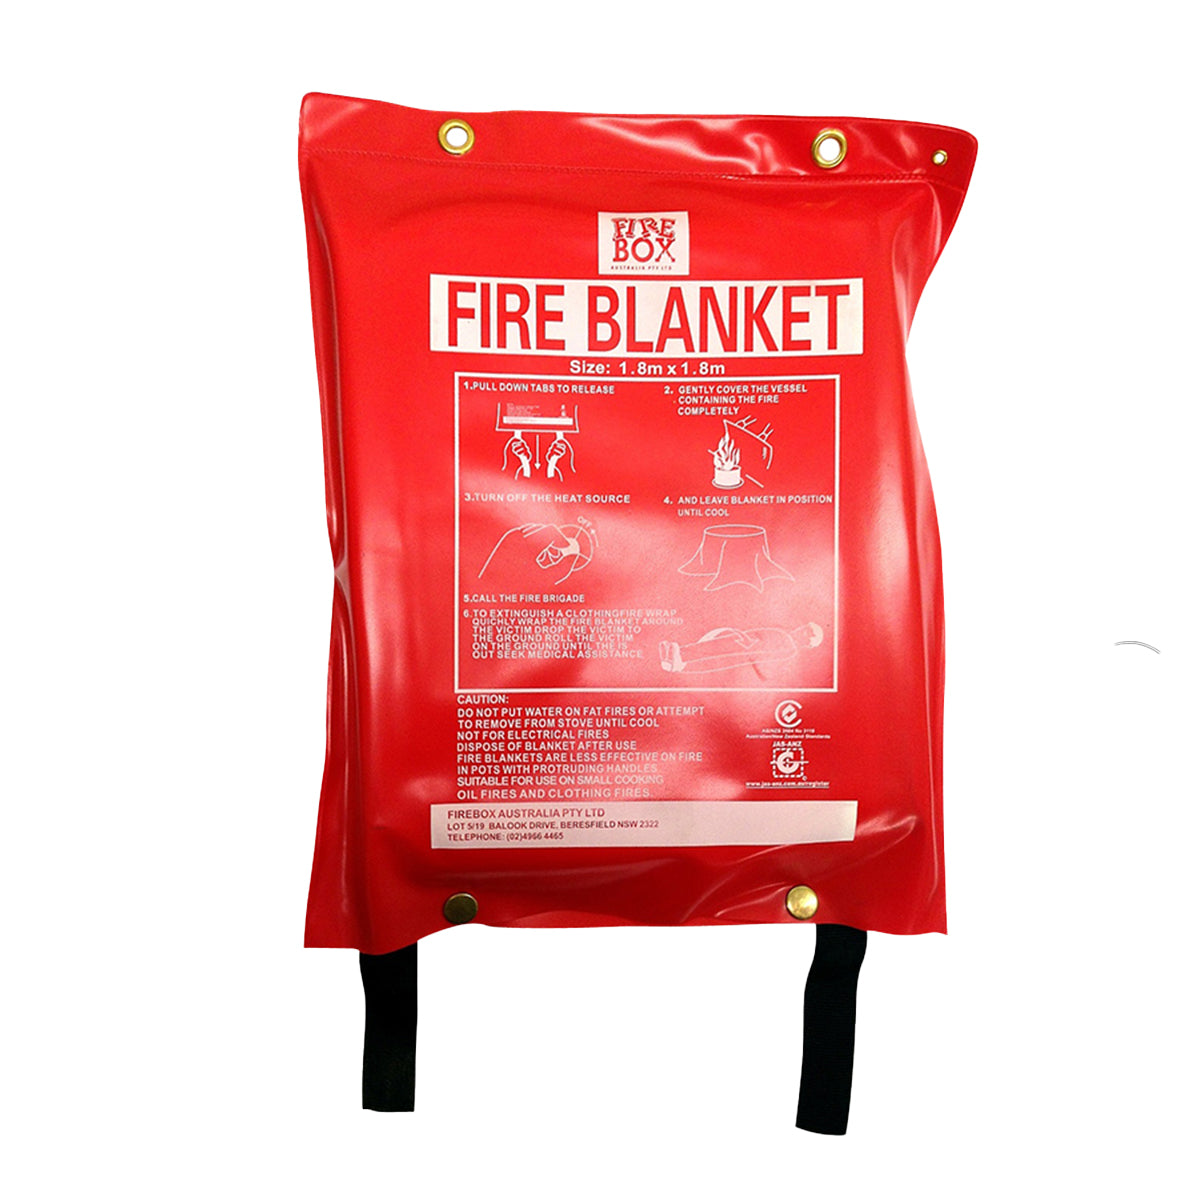 1.8m x 1.8m Fire Blanket - Premium Fire Blankets from Firebox - Shop now at Firebox Australia